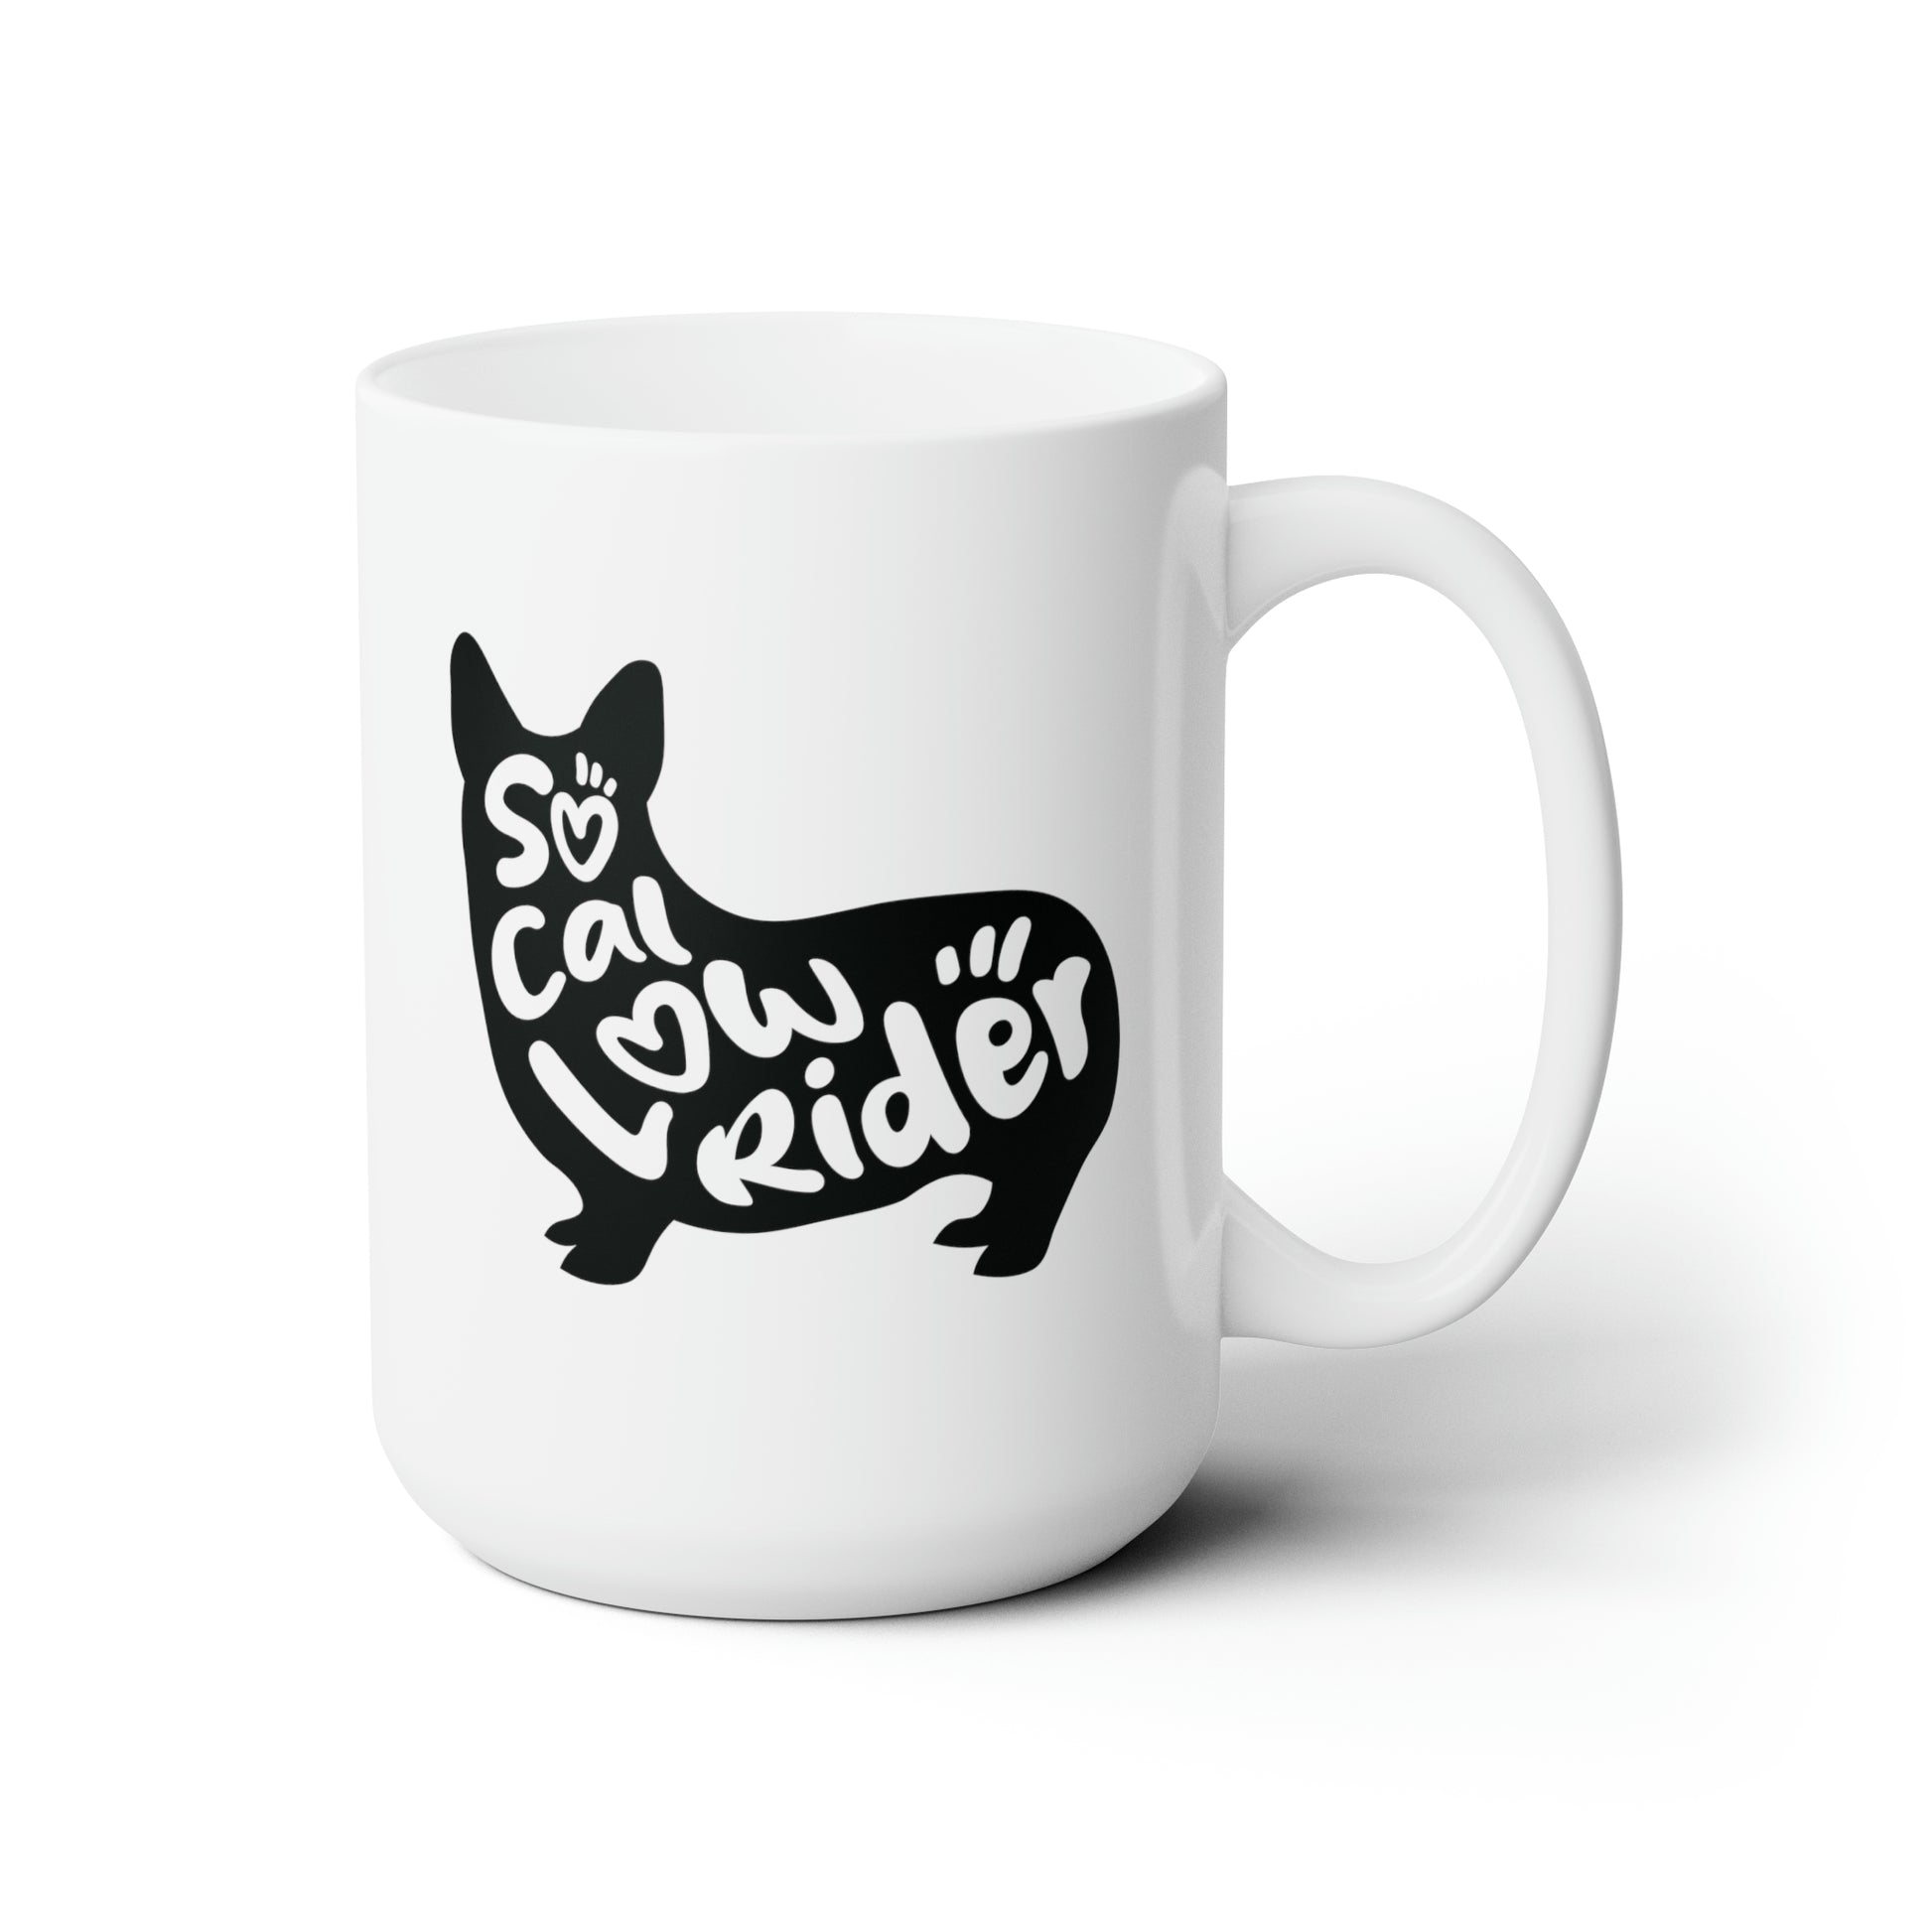 SoCal LowRider Southern California corgi dog coffee mug ceramic cup